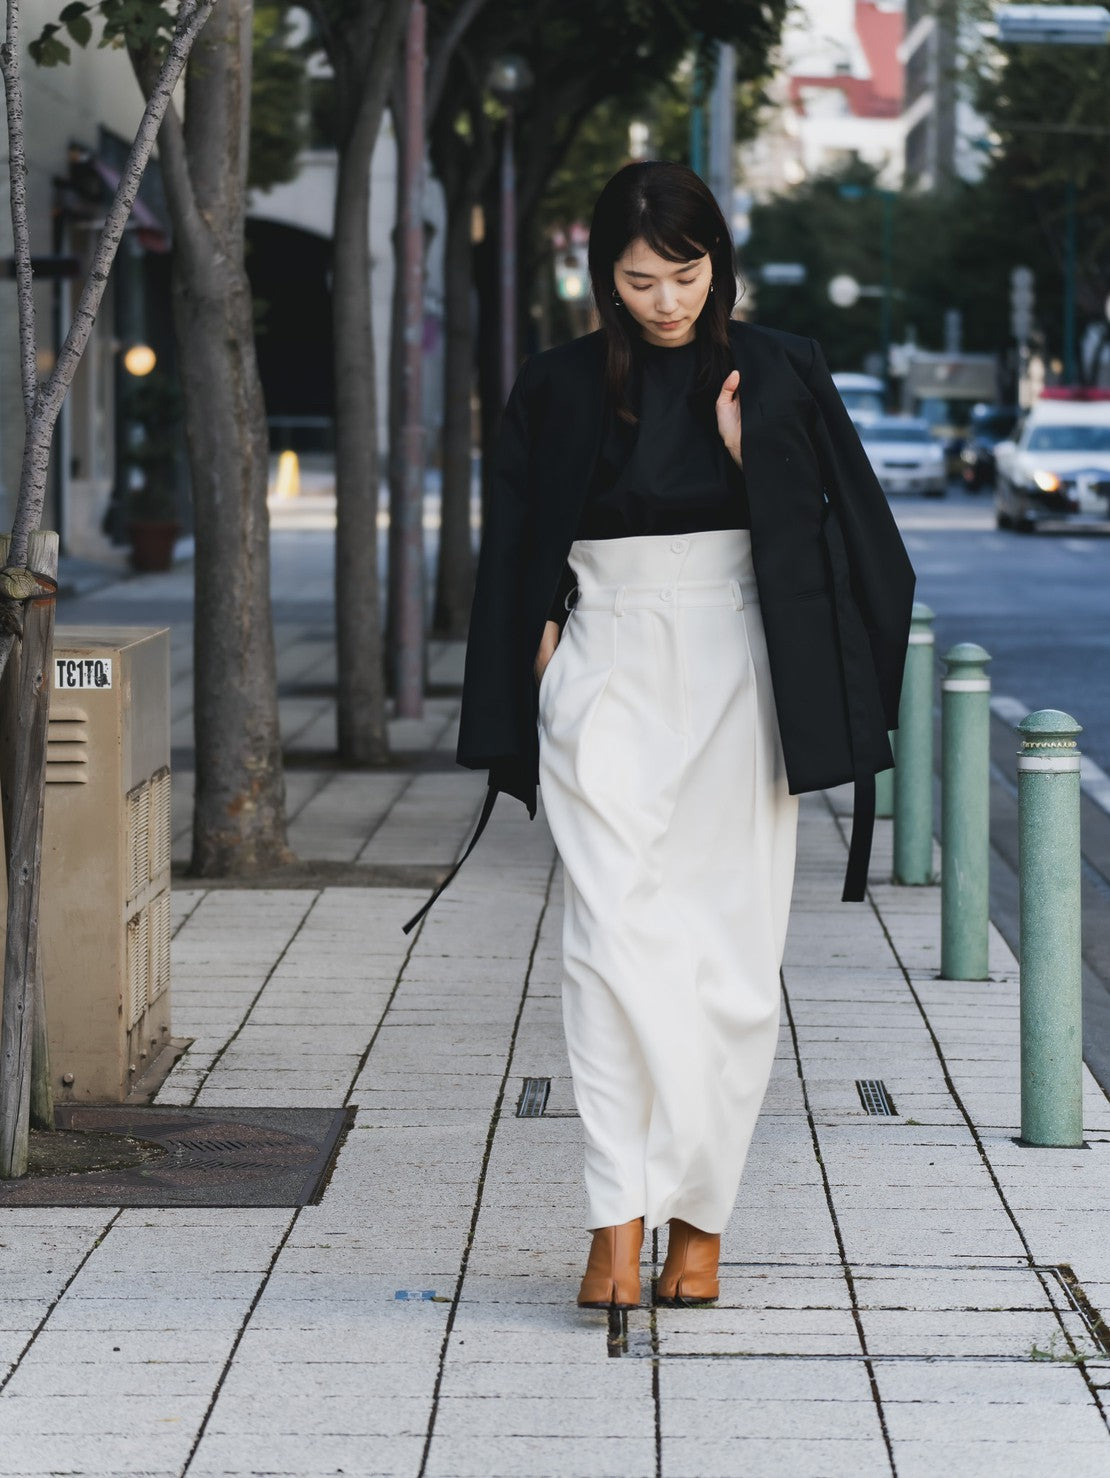 【予約販売】Greta / first step skirt （BLACK/OFF-WHITE)